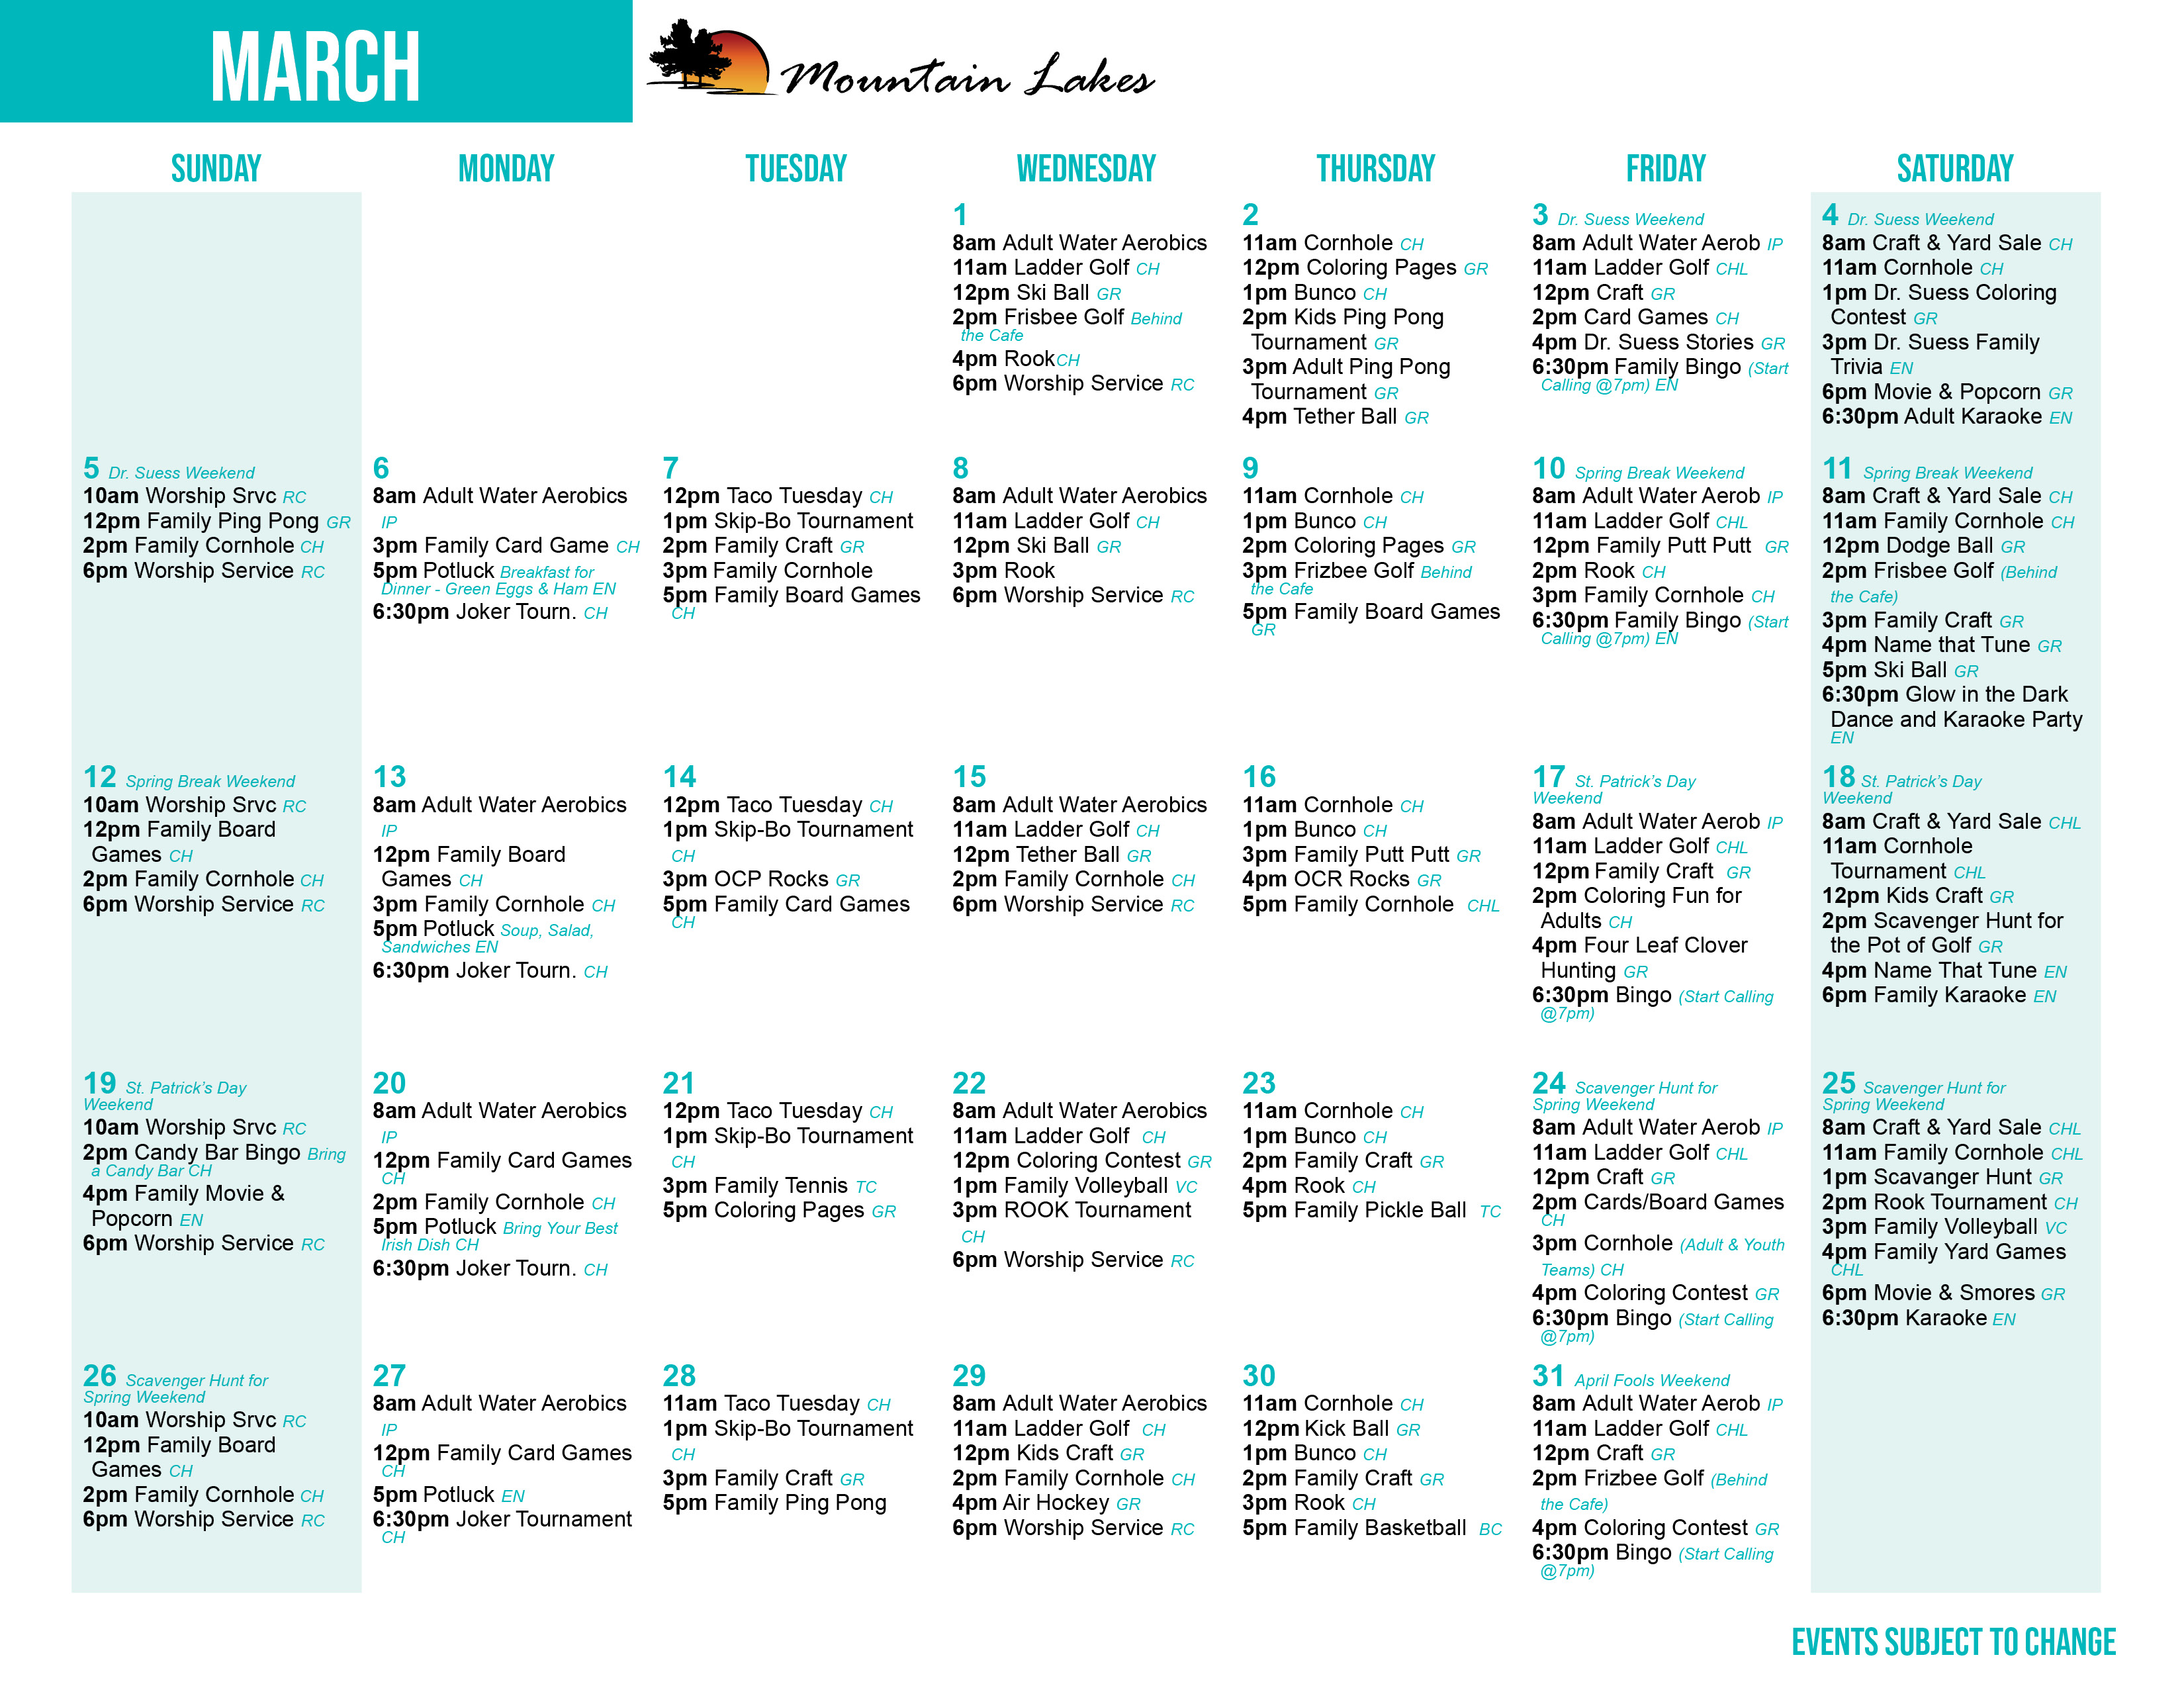 Mountain Lakes' March Activity Calendars